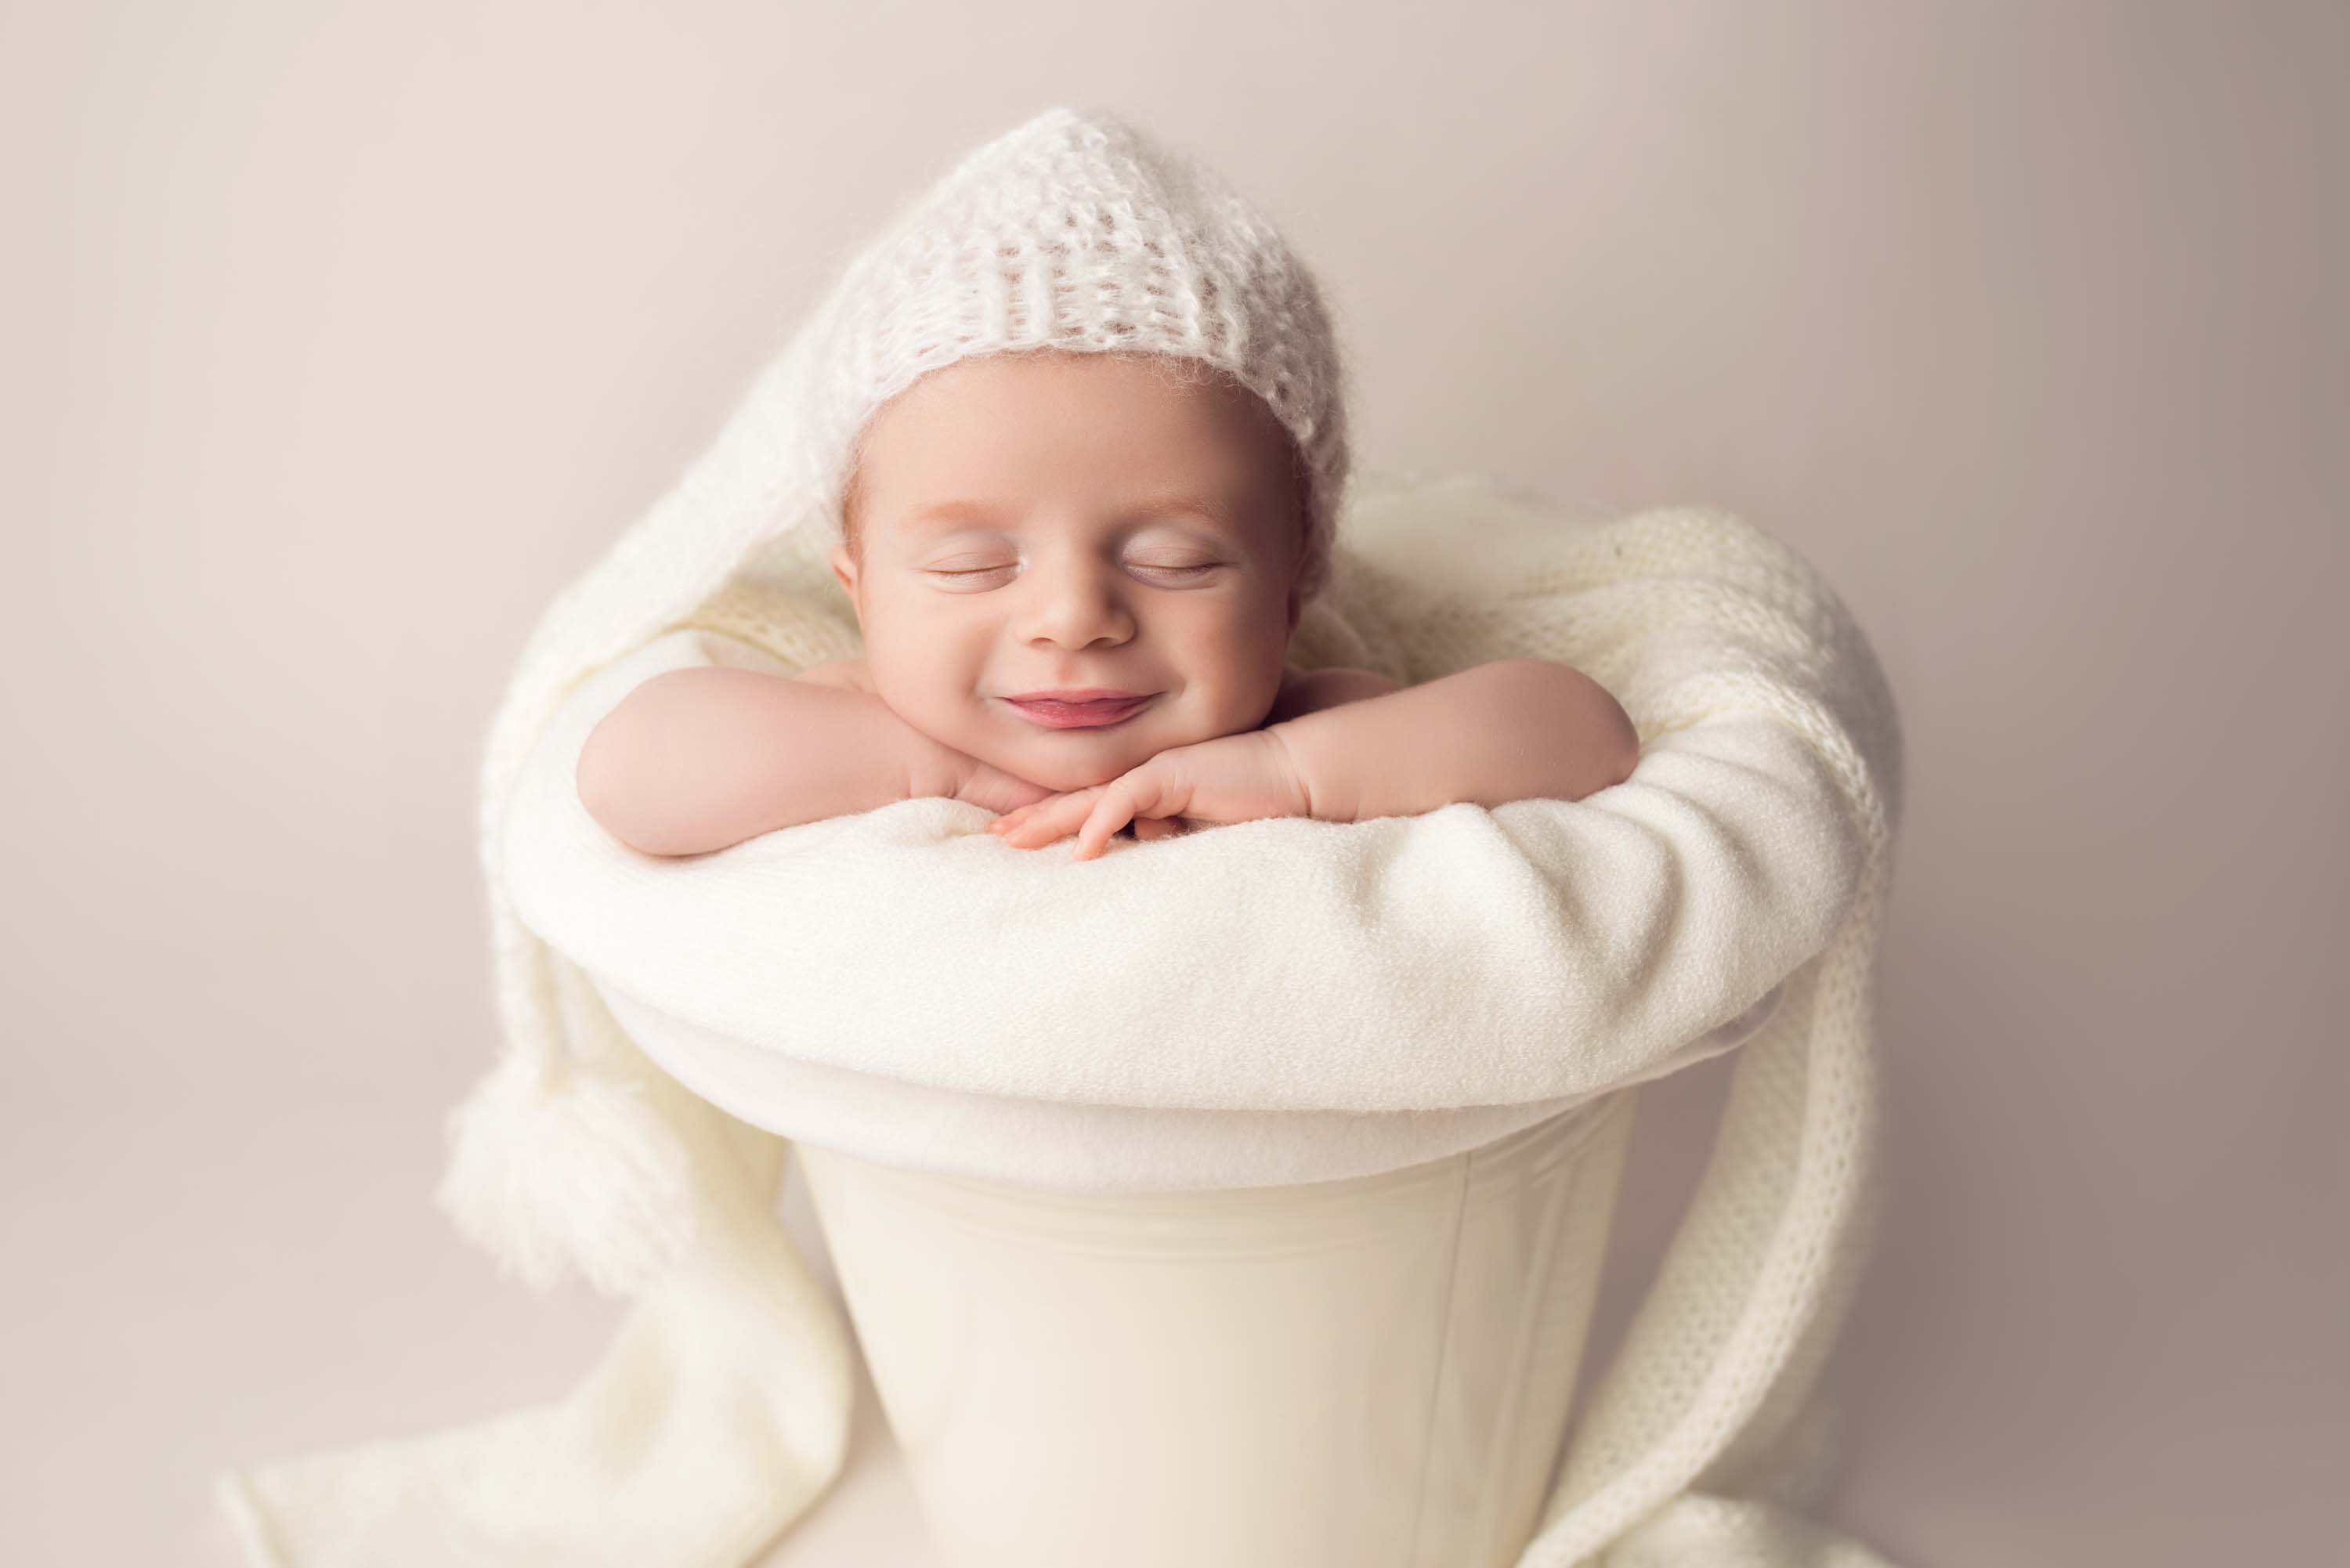 Baby boy asleep in a bucket wearing a sleeping hat and a big smile